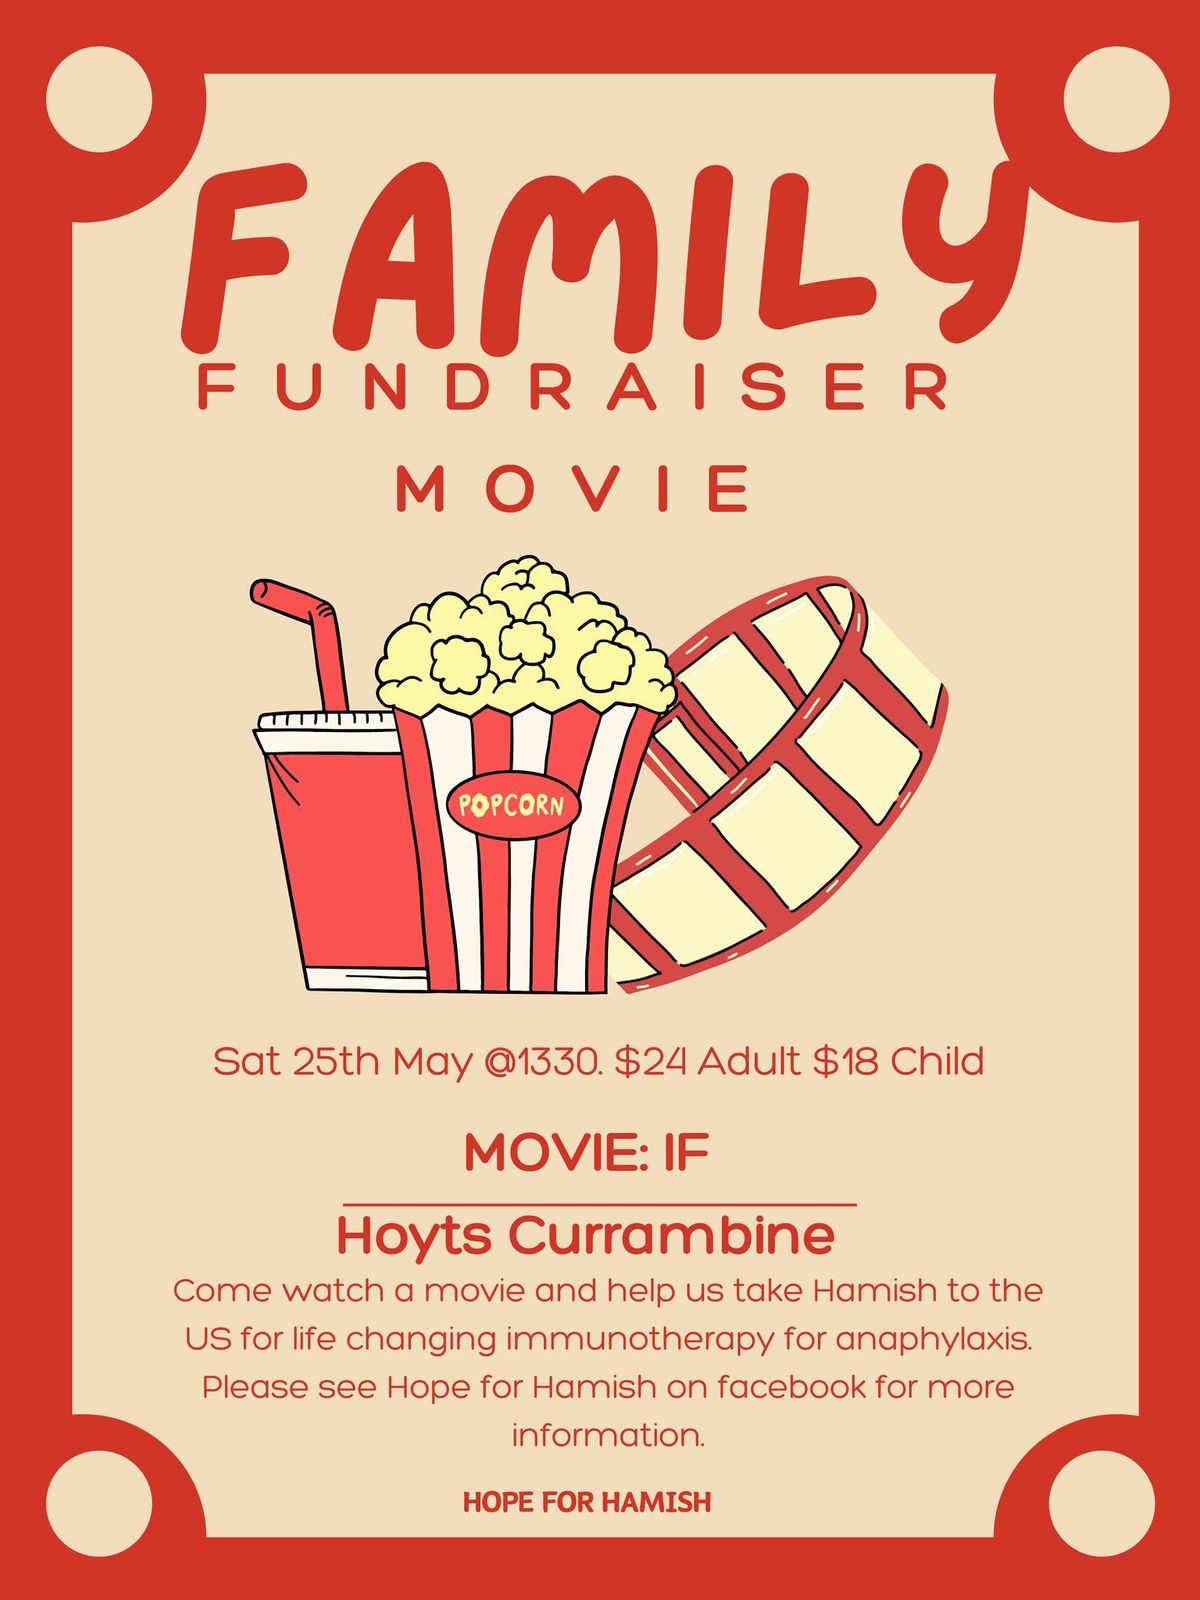 Family Fundraiser Movie. IF 